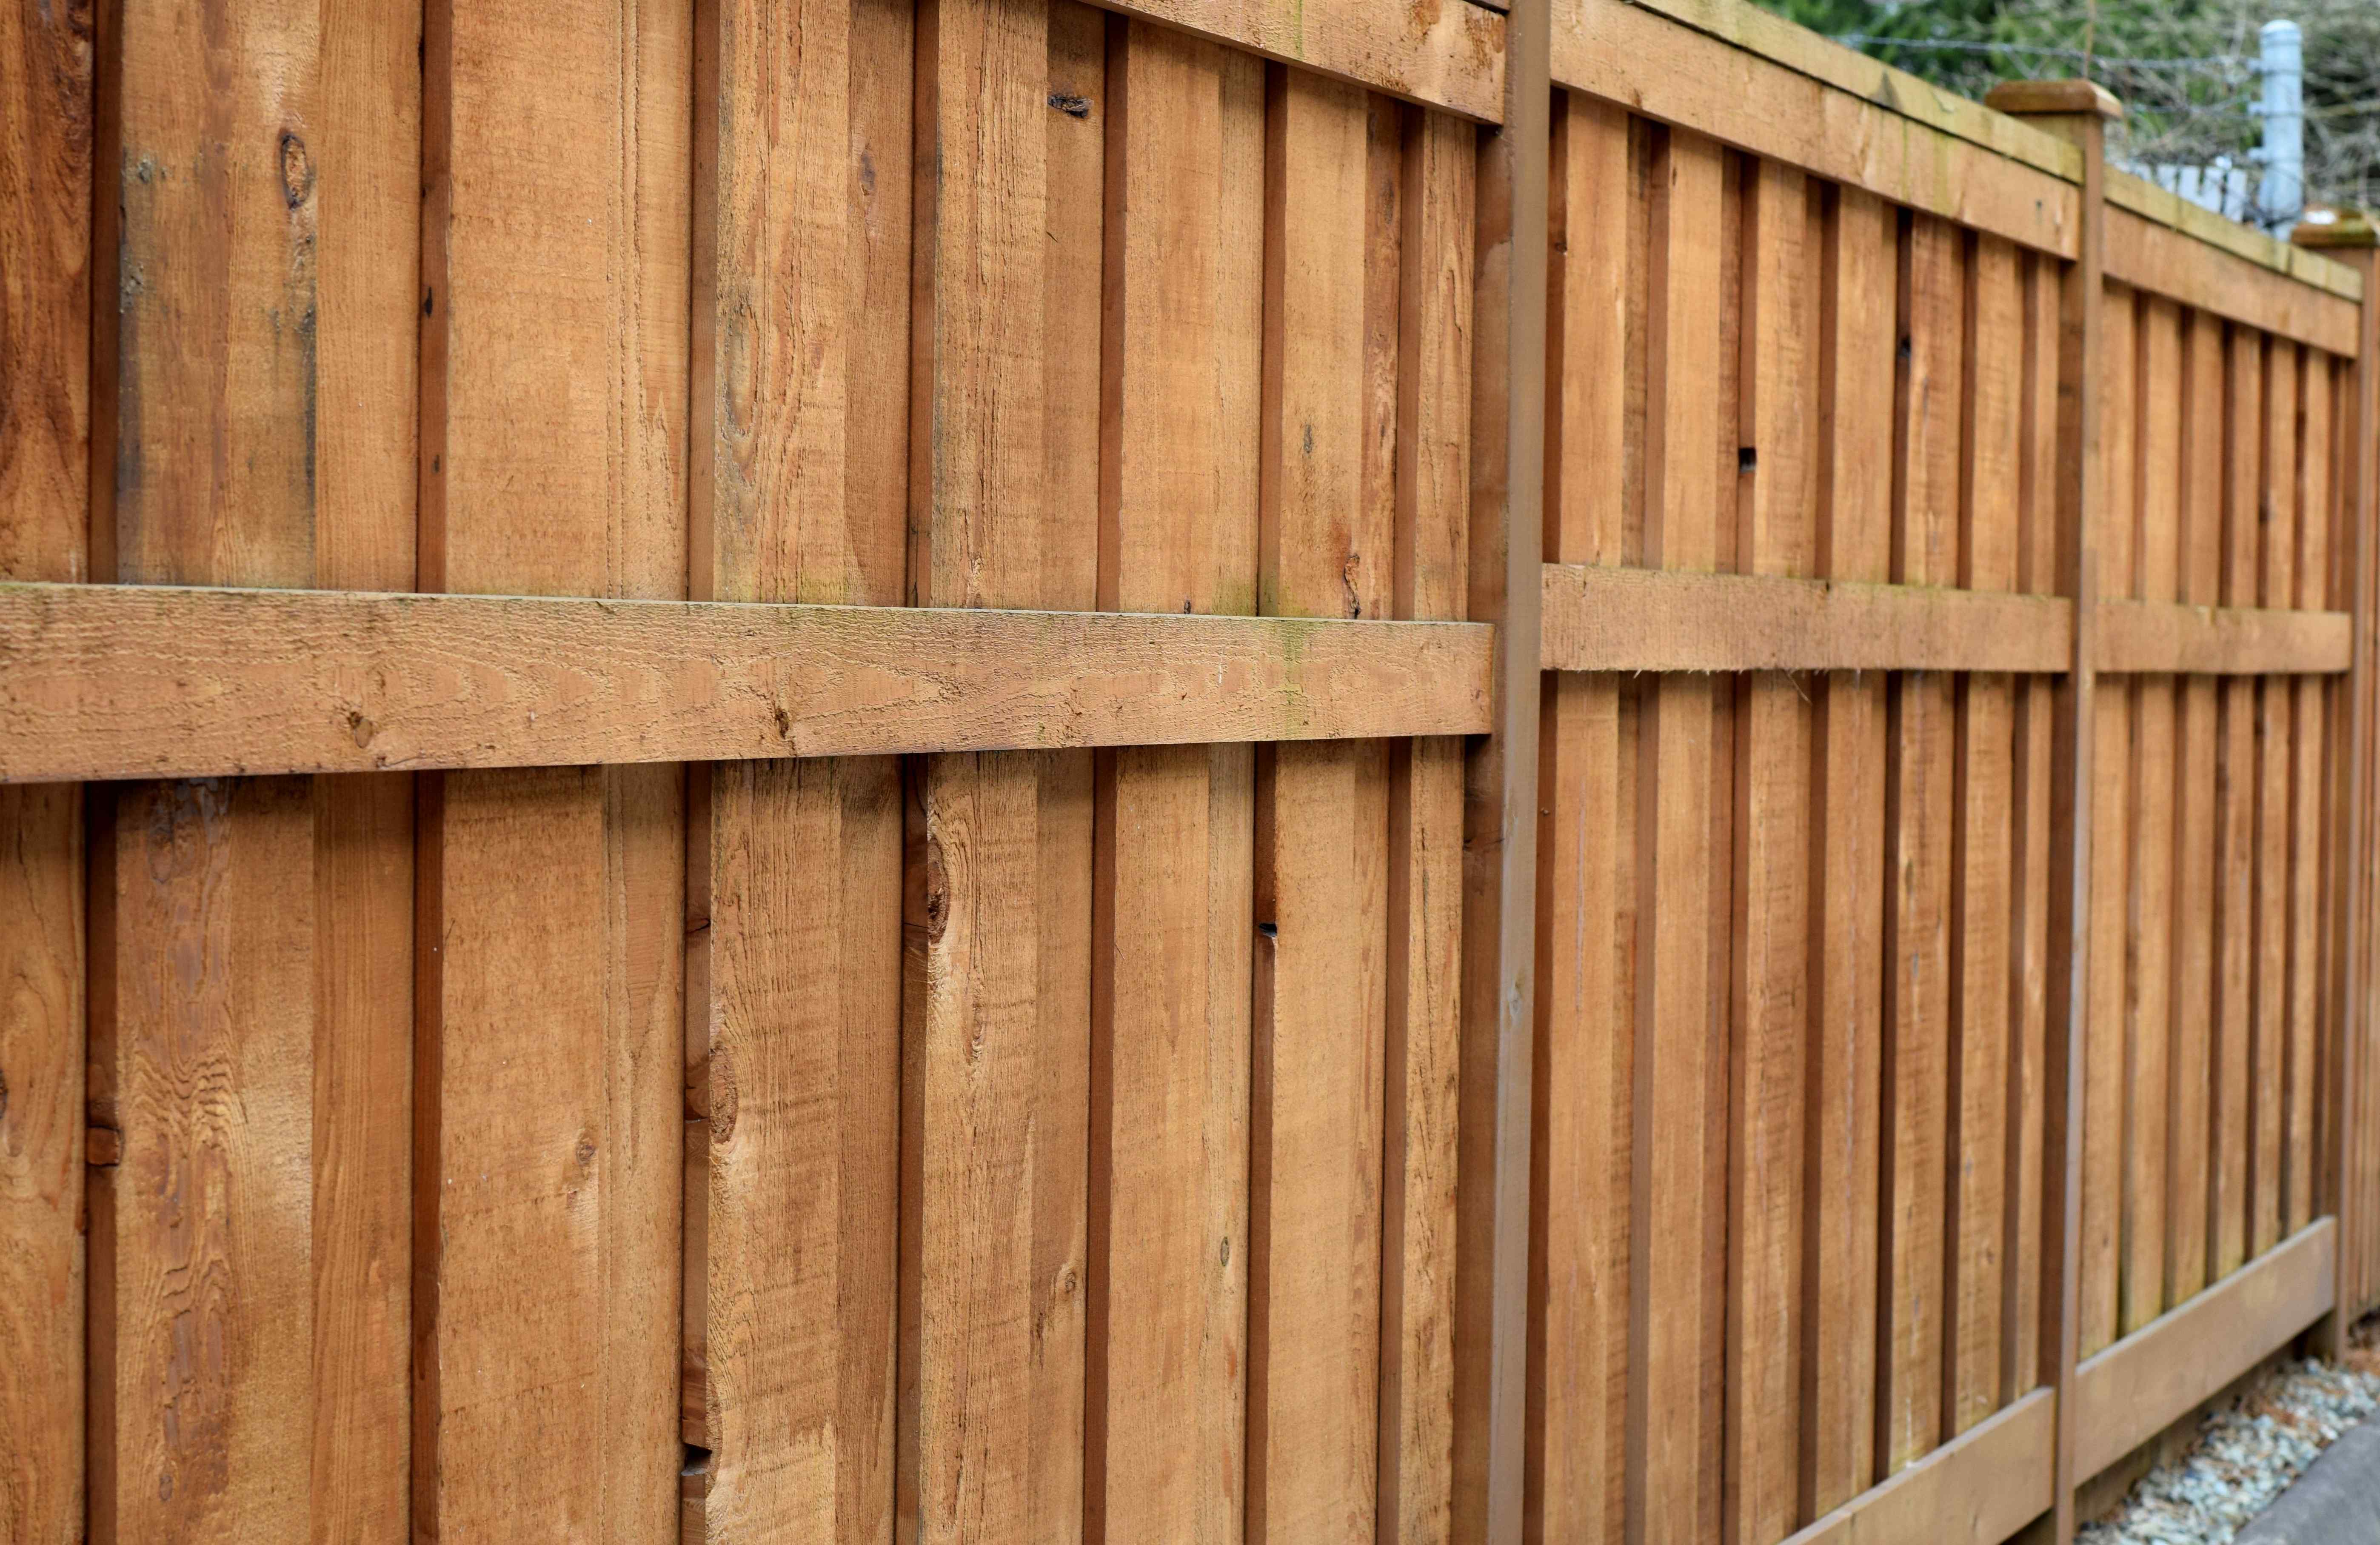 Metairie LA Shadowbox style wood fence